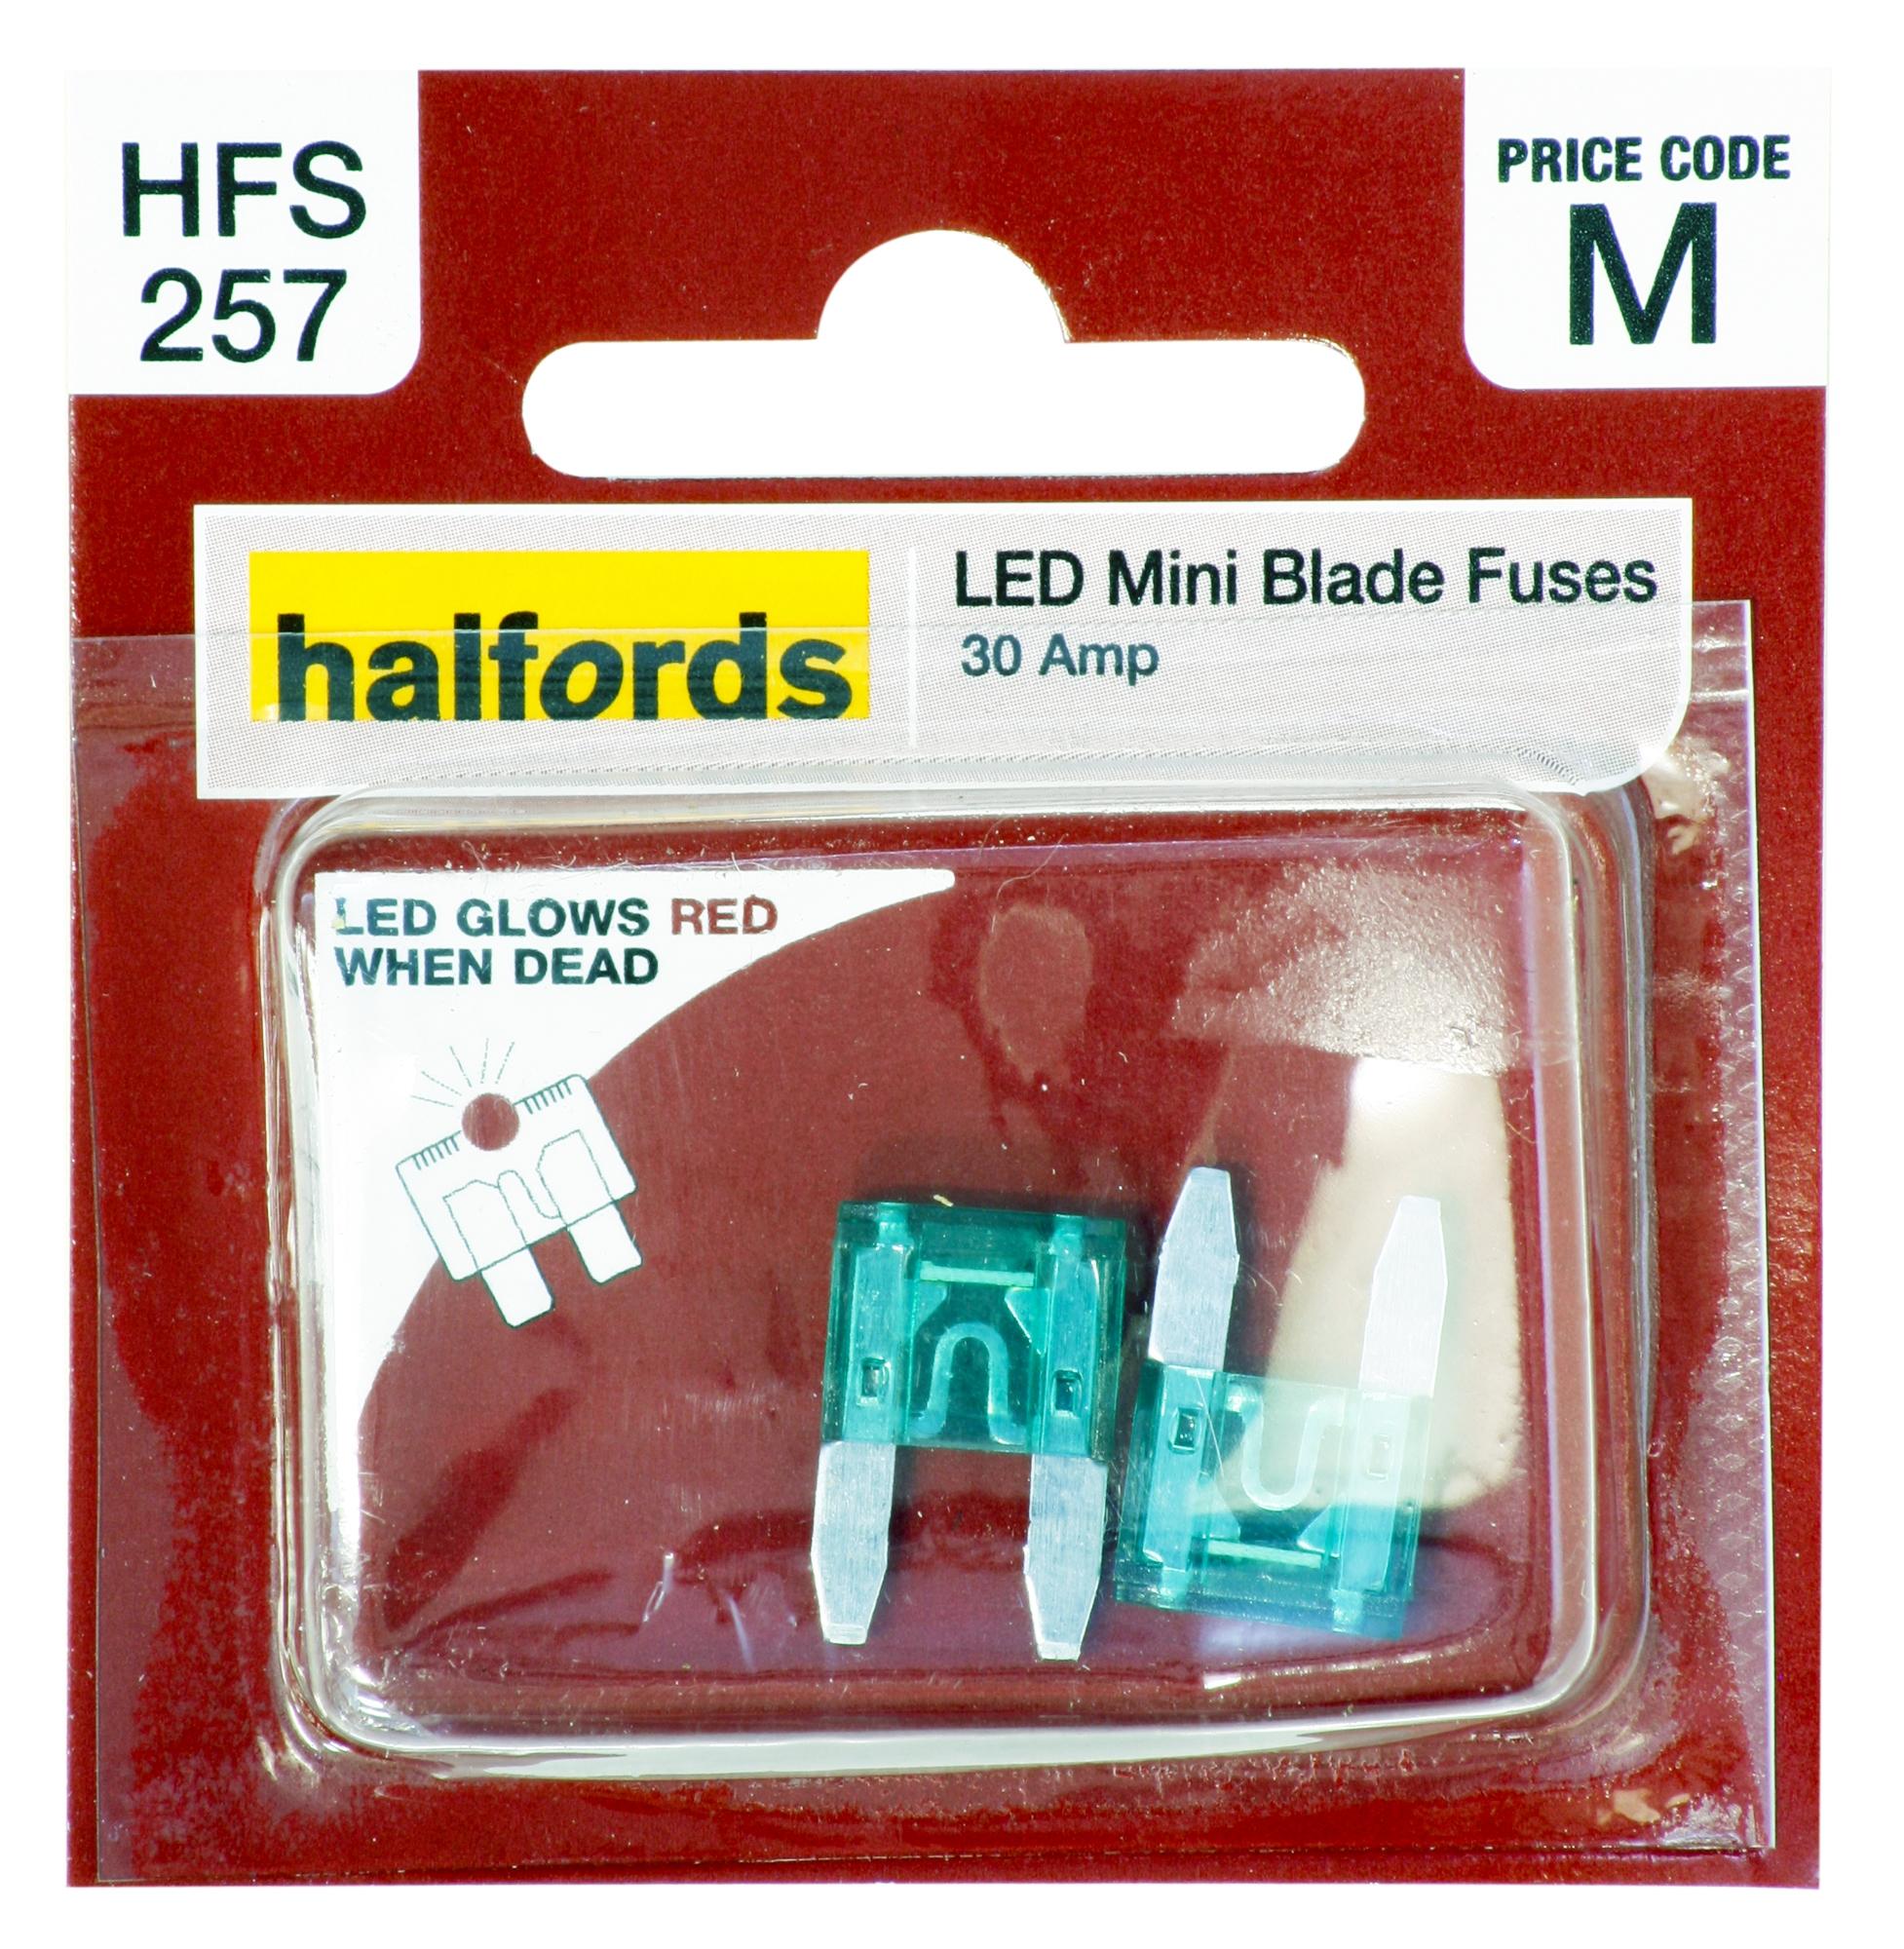 Halfords Led Mini Blade Fuses 30 Amp (Hfs257)